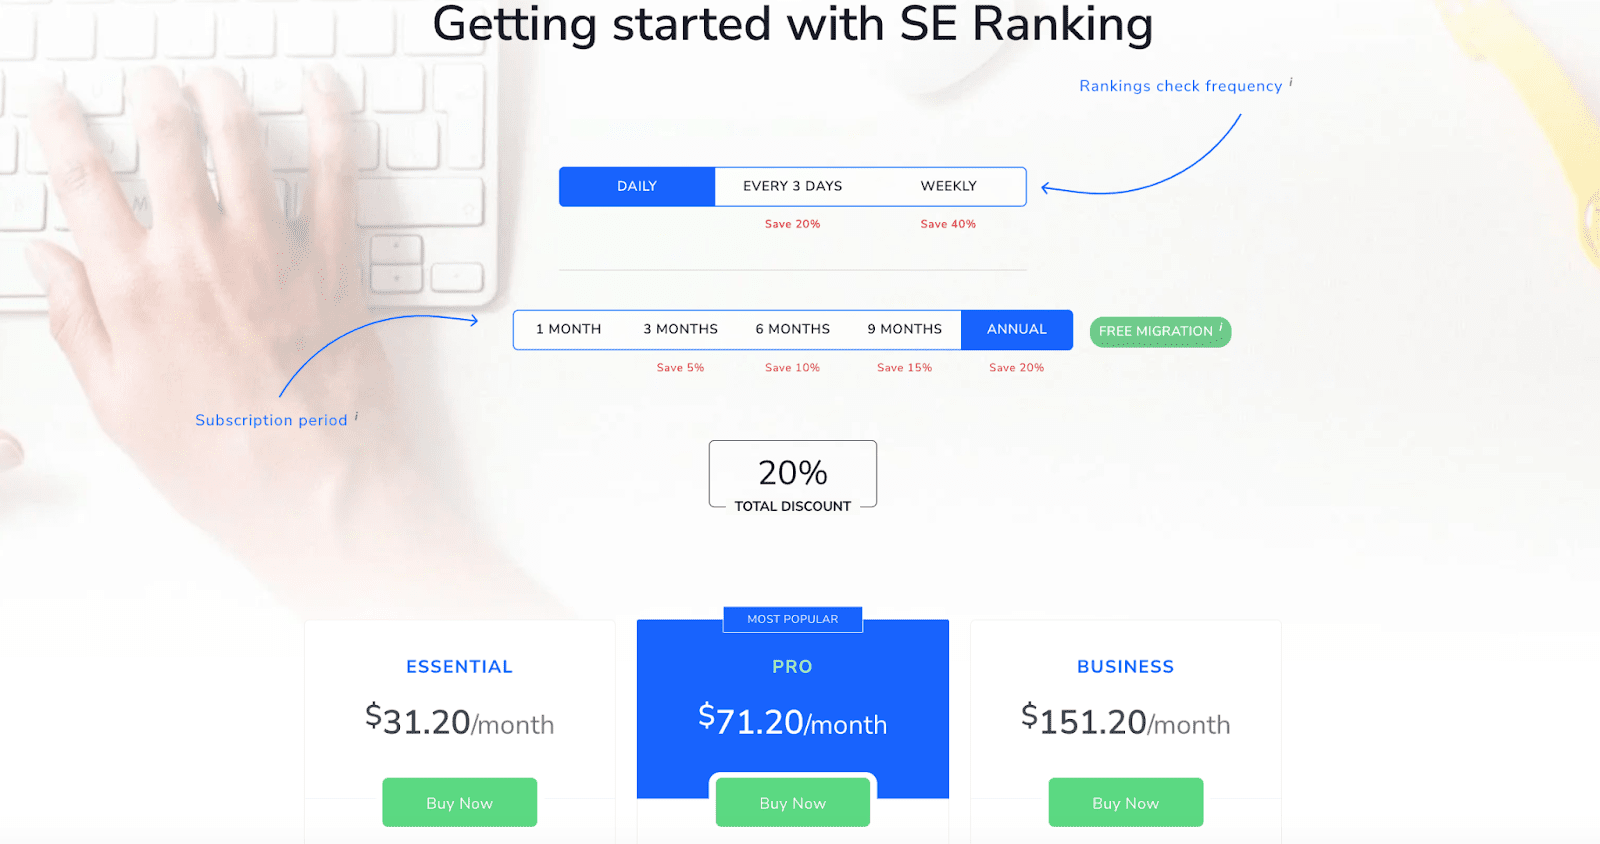 SE Ranking pricing details